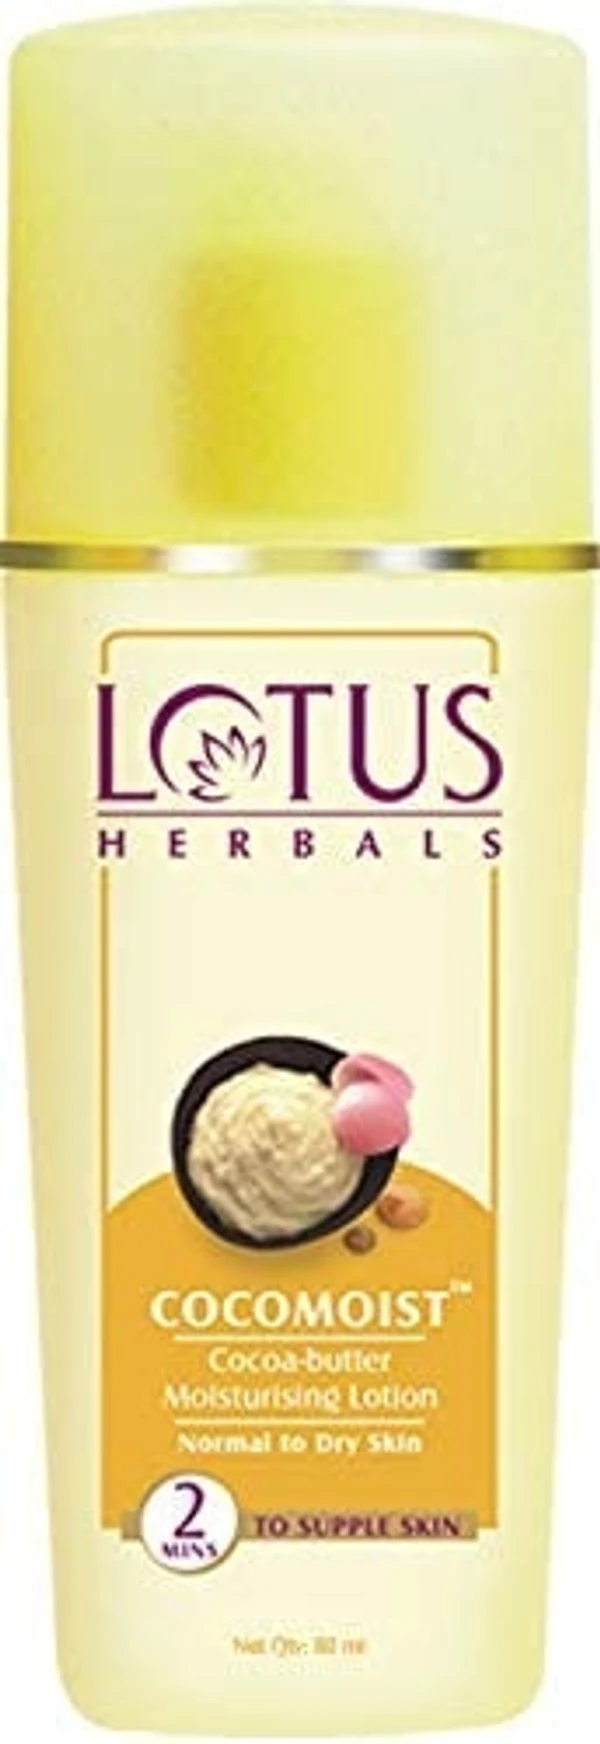 Lotus Herbals Cocomoist Cocoa Butter Moisturising Lotion, 80ml